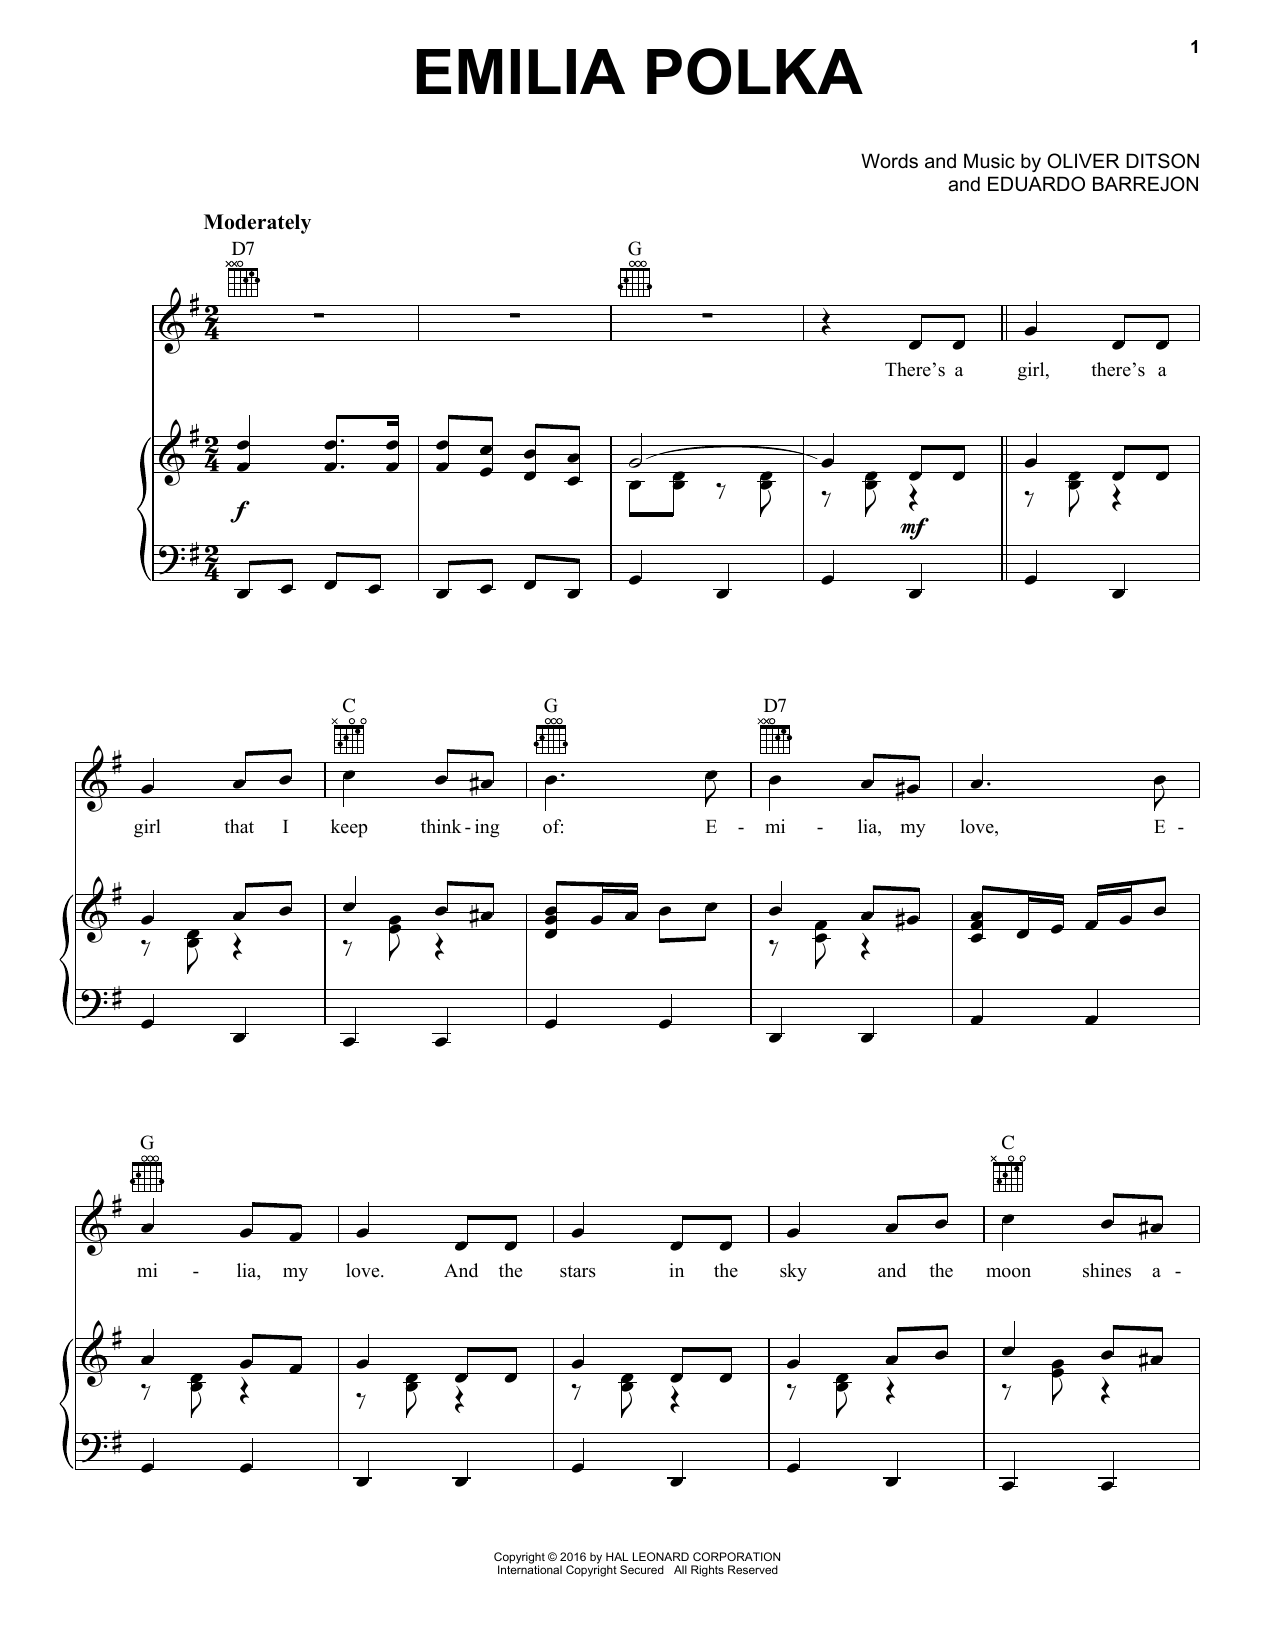 Oliver Ditson & Eduardo Barrejon Emilia Polka Sheet Music Notes & Chords for Piano, Vocal & Guitar (Right-Hand Melody) - Download or Print PDF